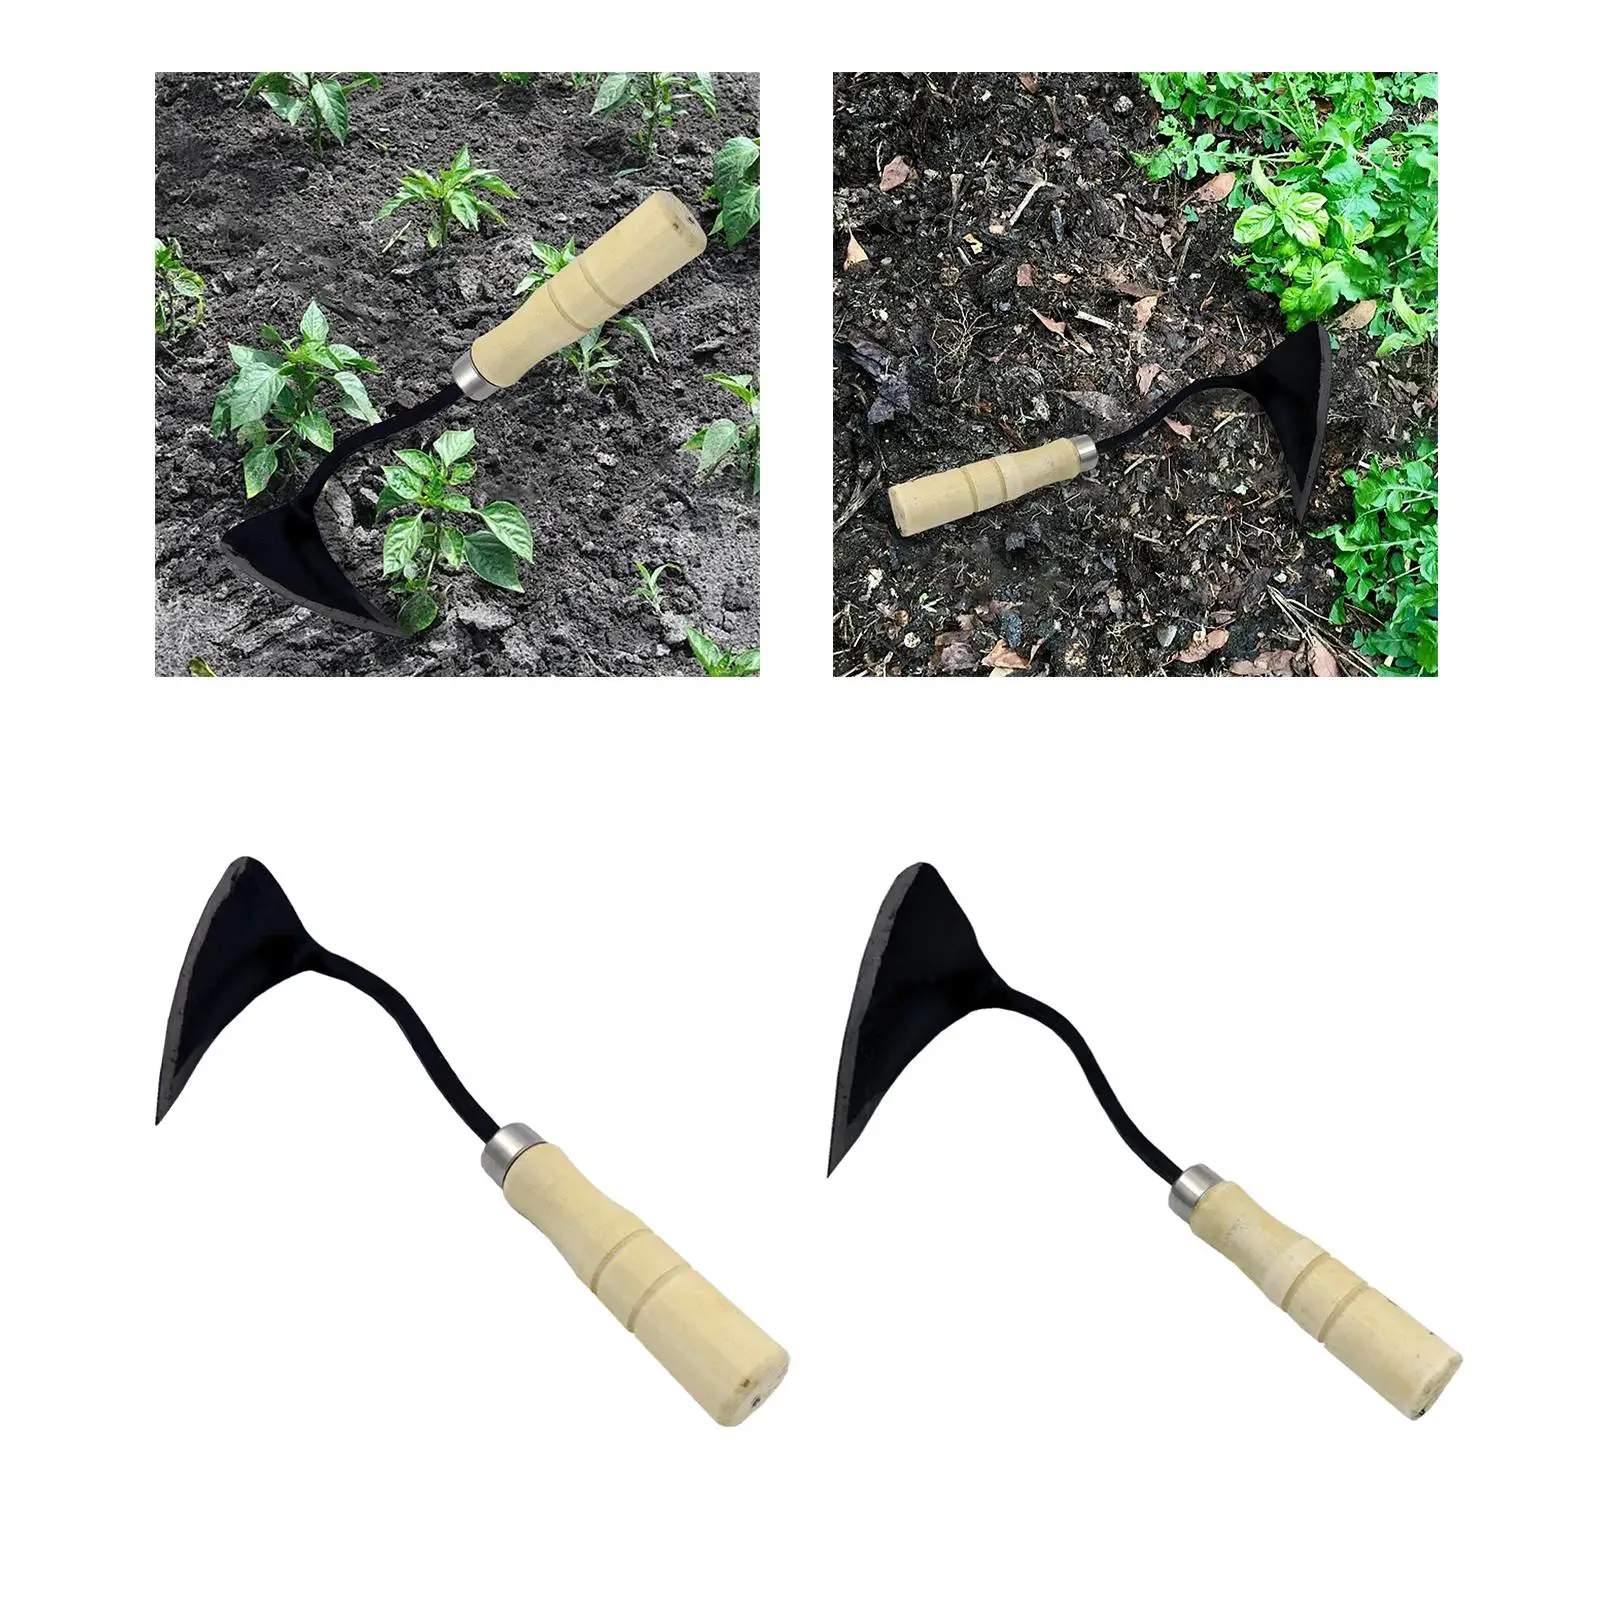 Gardening Plow Hoe Less Effort Portable Farming Tool Ergonomic Sharp Weeds Removal Tool for Weeding Planting Vegetable Lawn